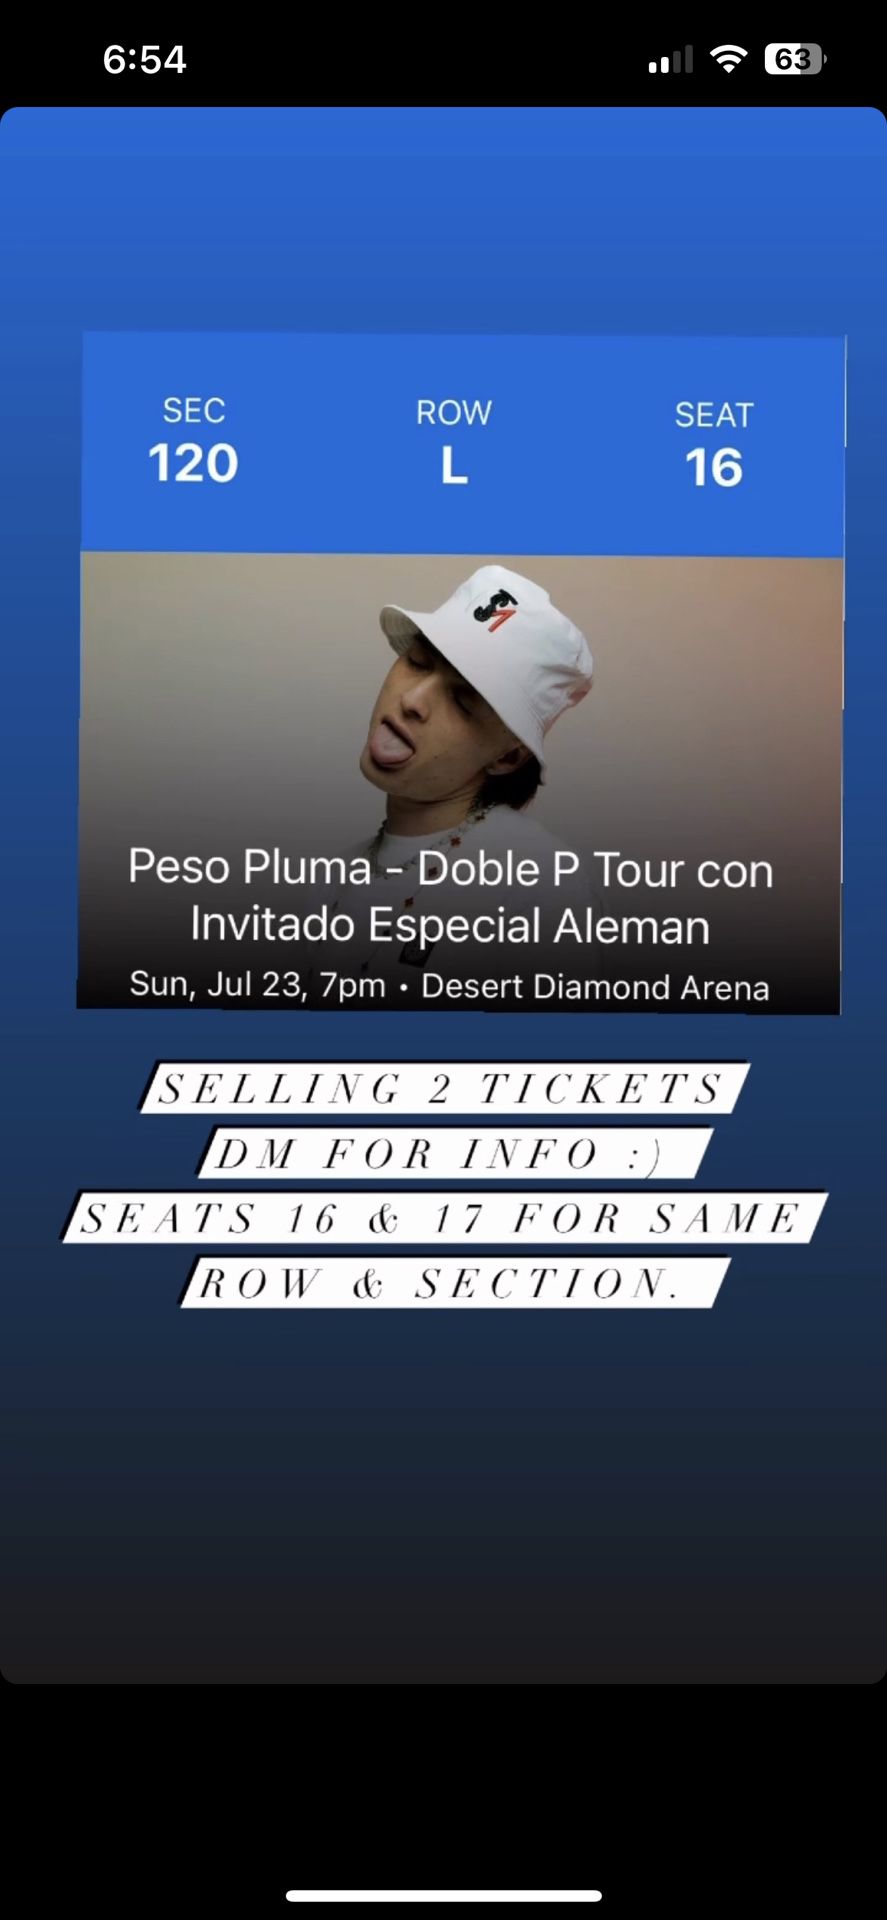 Peso Pluma Tickets